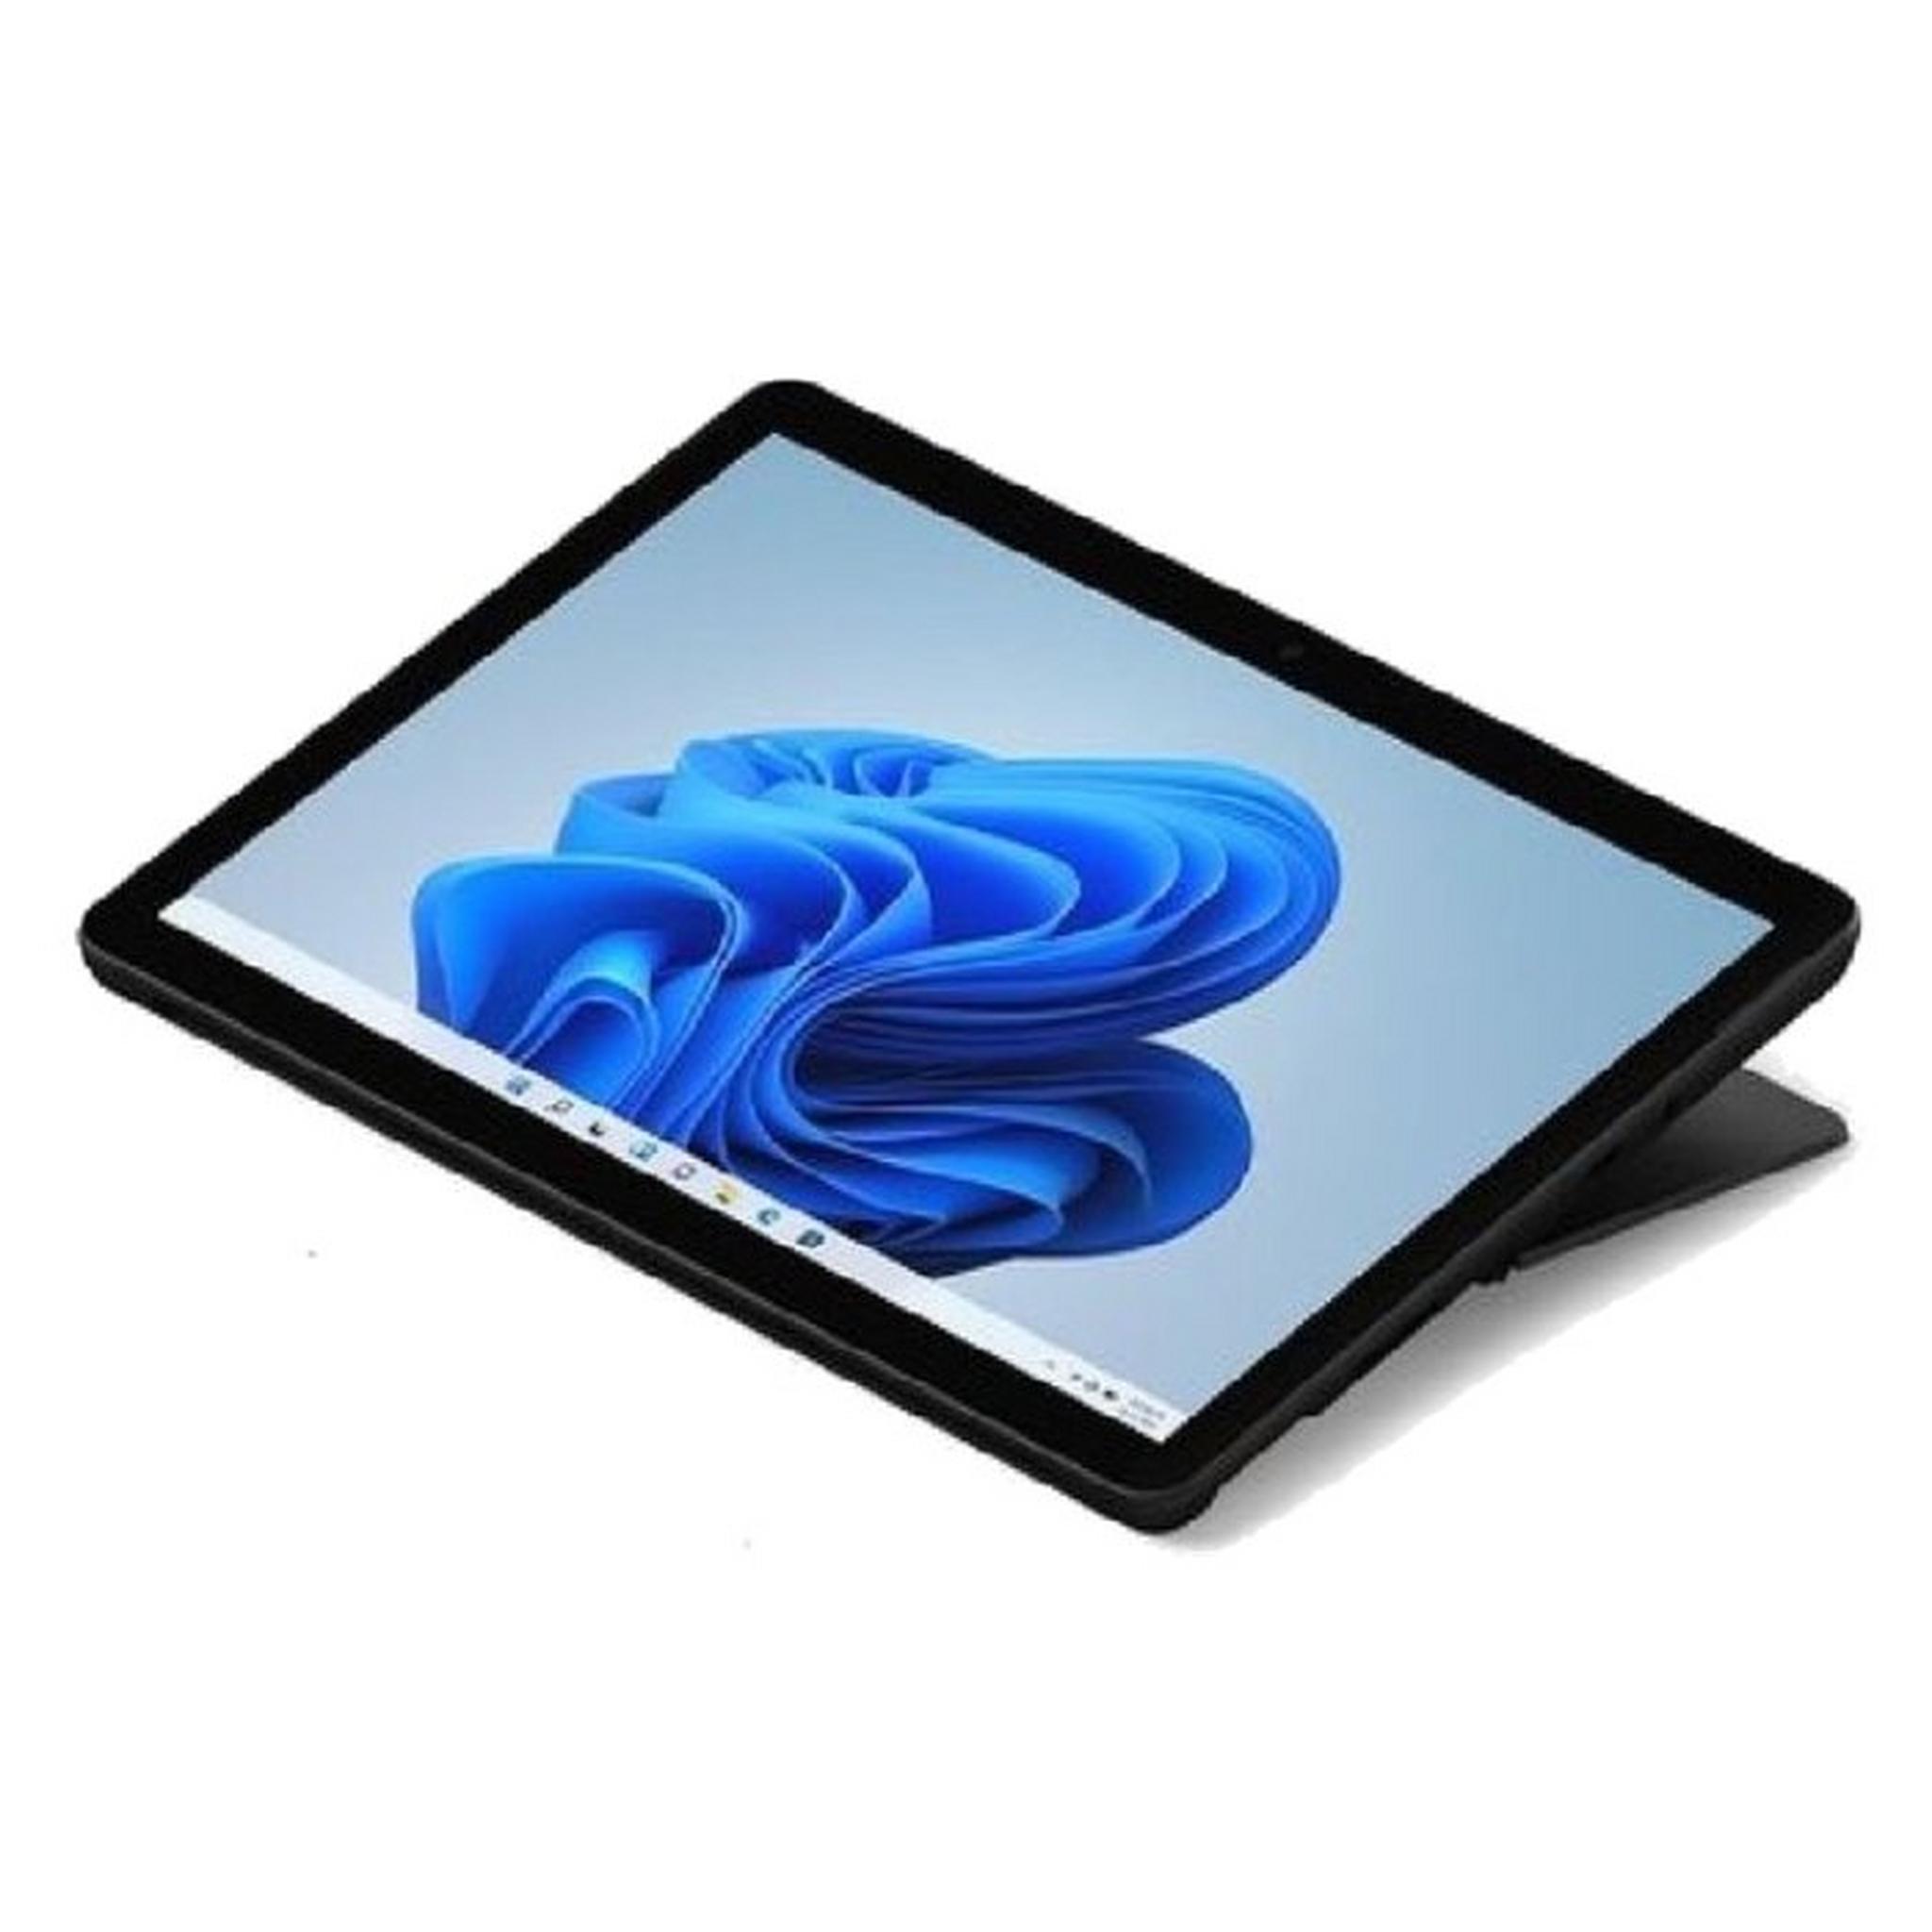 Microsoft Surface Go 3, Intel Pentium Gold, 8GB RAM, 128GB SSD, 10.5-inch Convertible laptop - Black